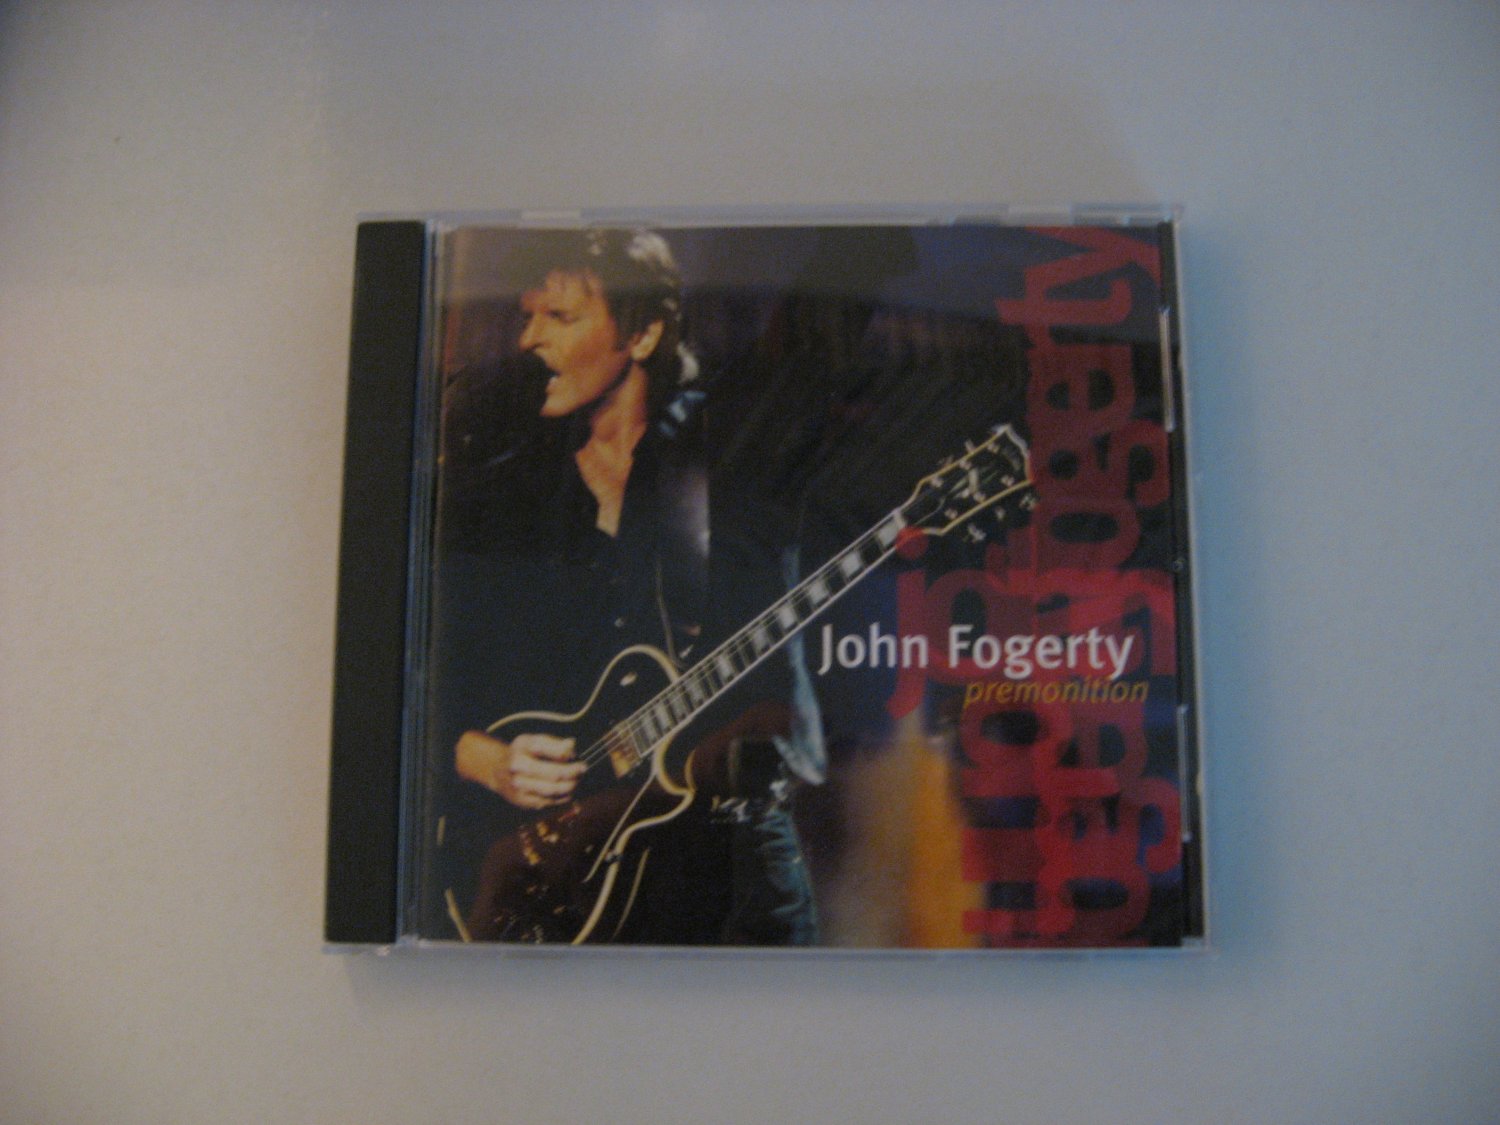 John Fogerty - Premonition - Compact Disc